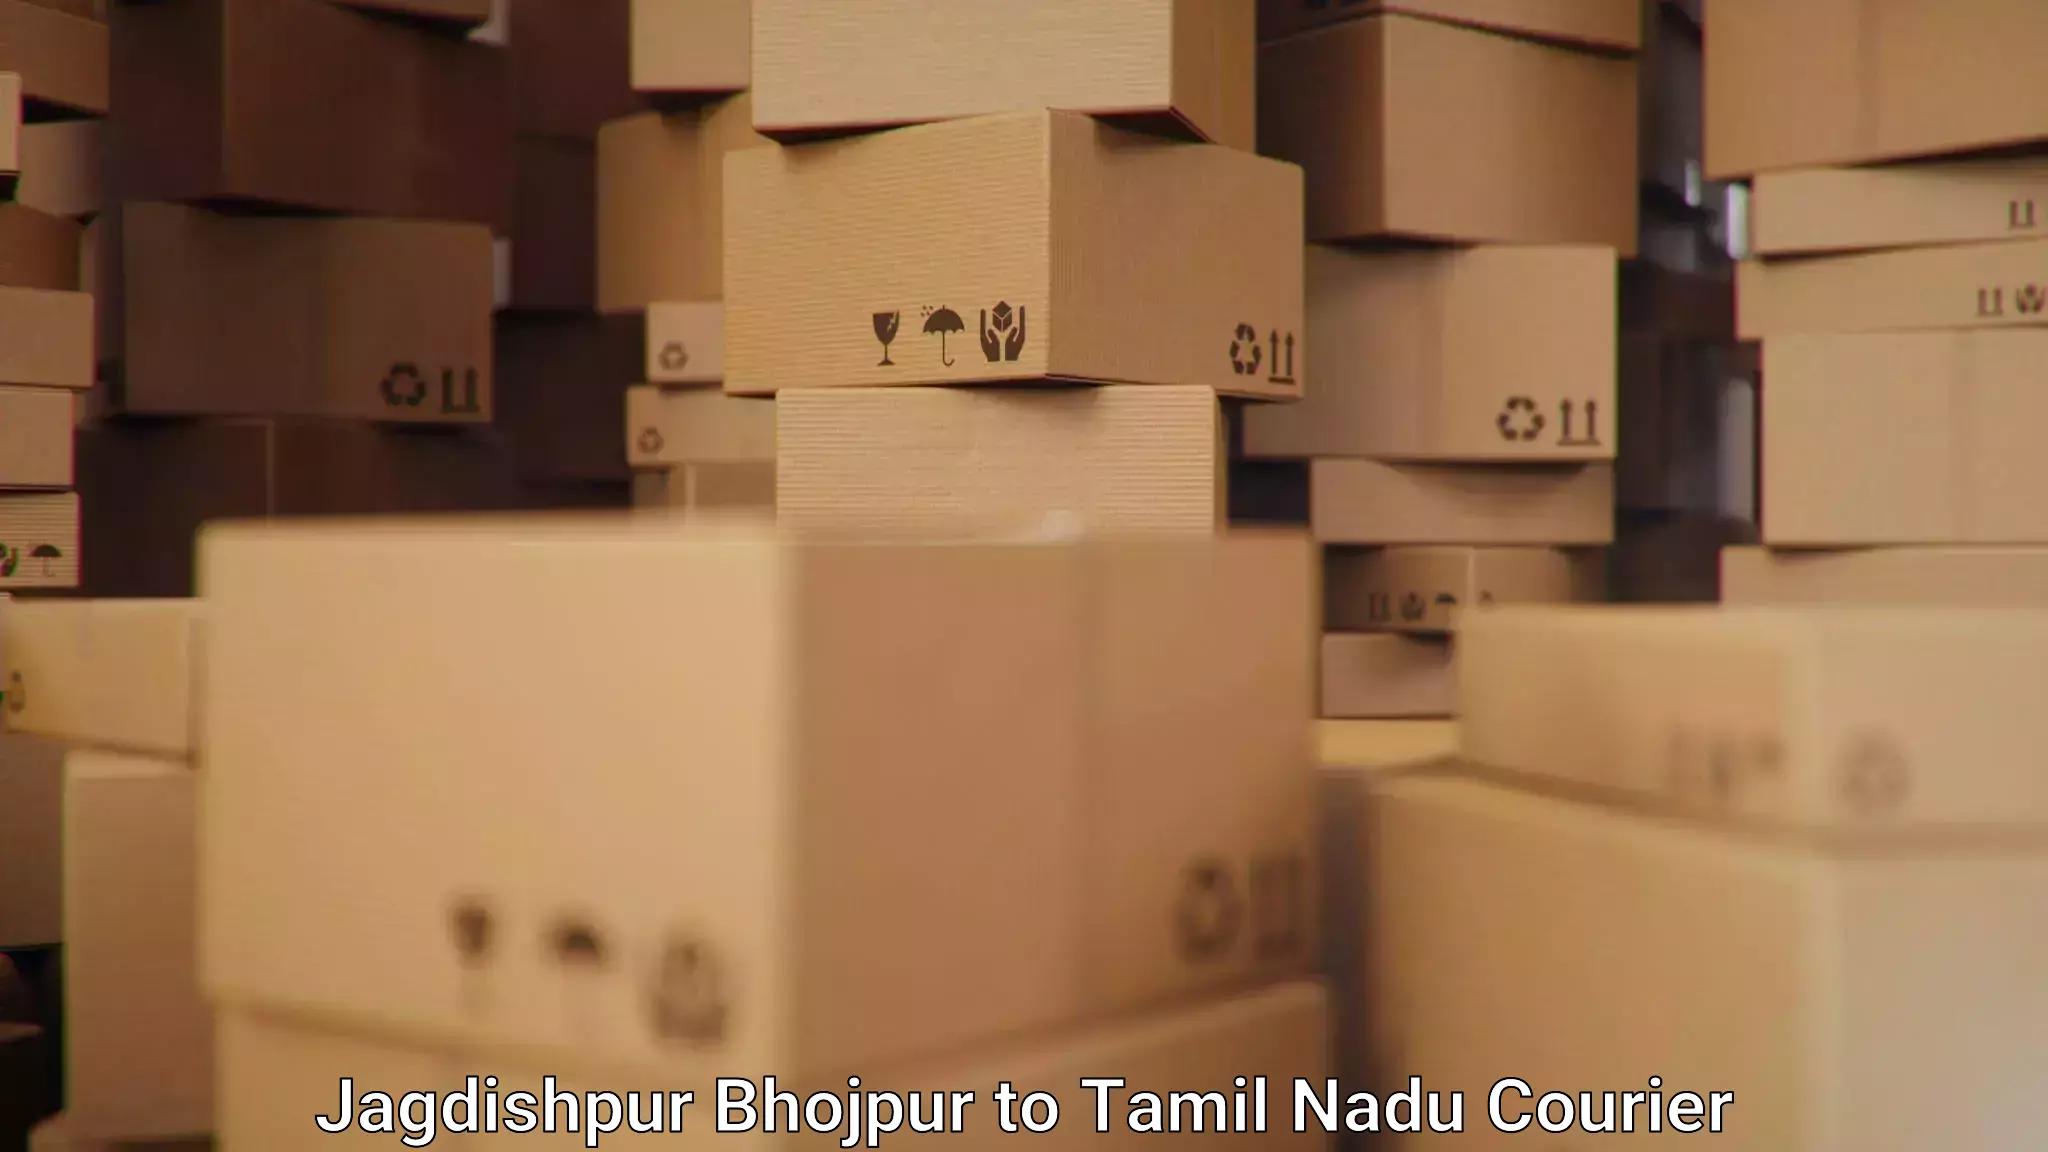 Specialized shipment handling Jagdishpur Bhojpur to Tamil Nadu